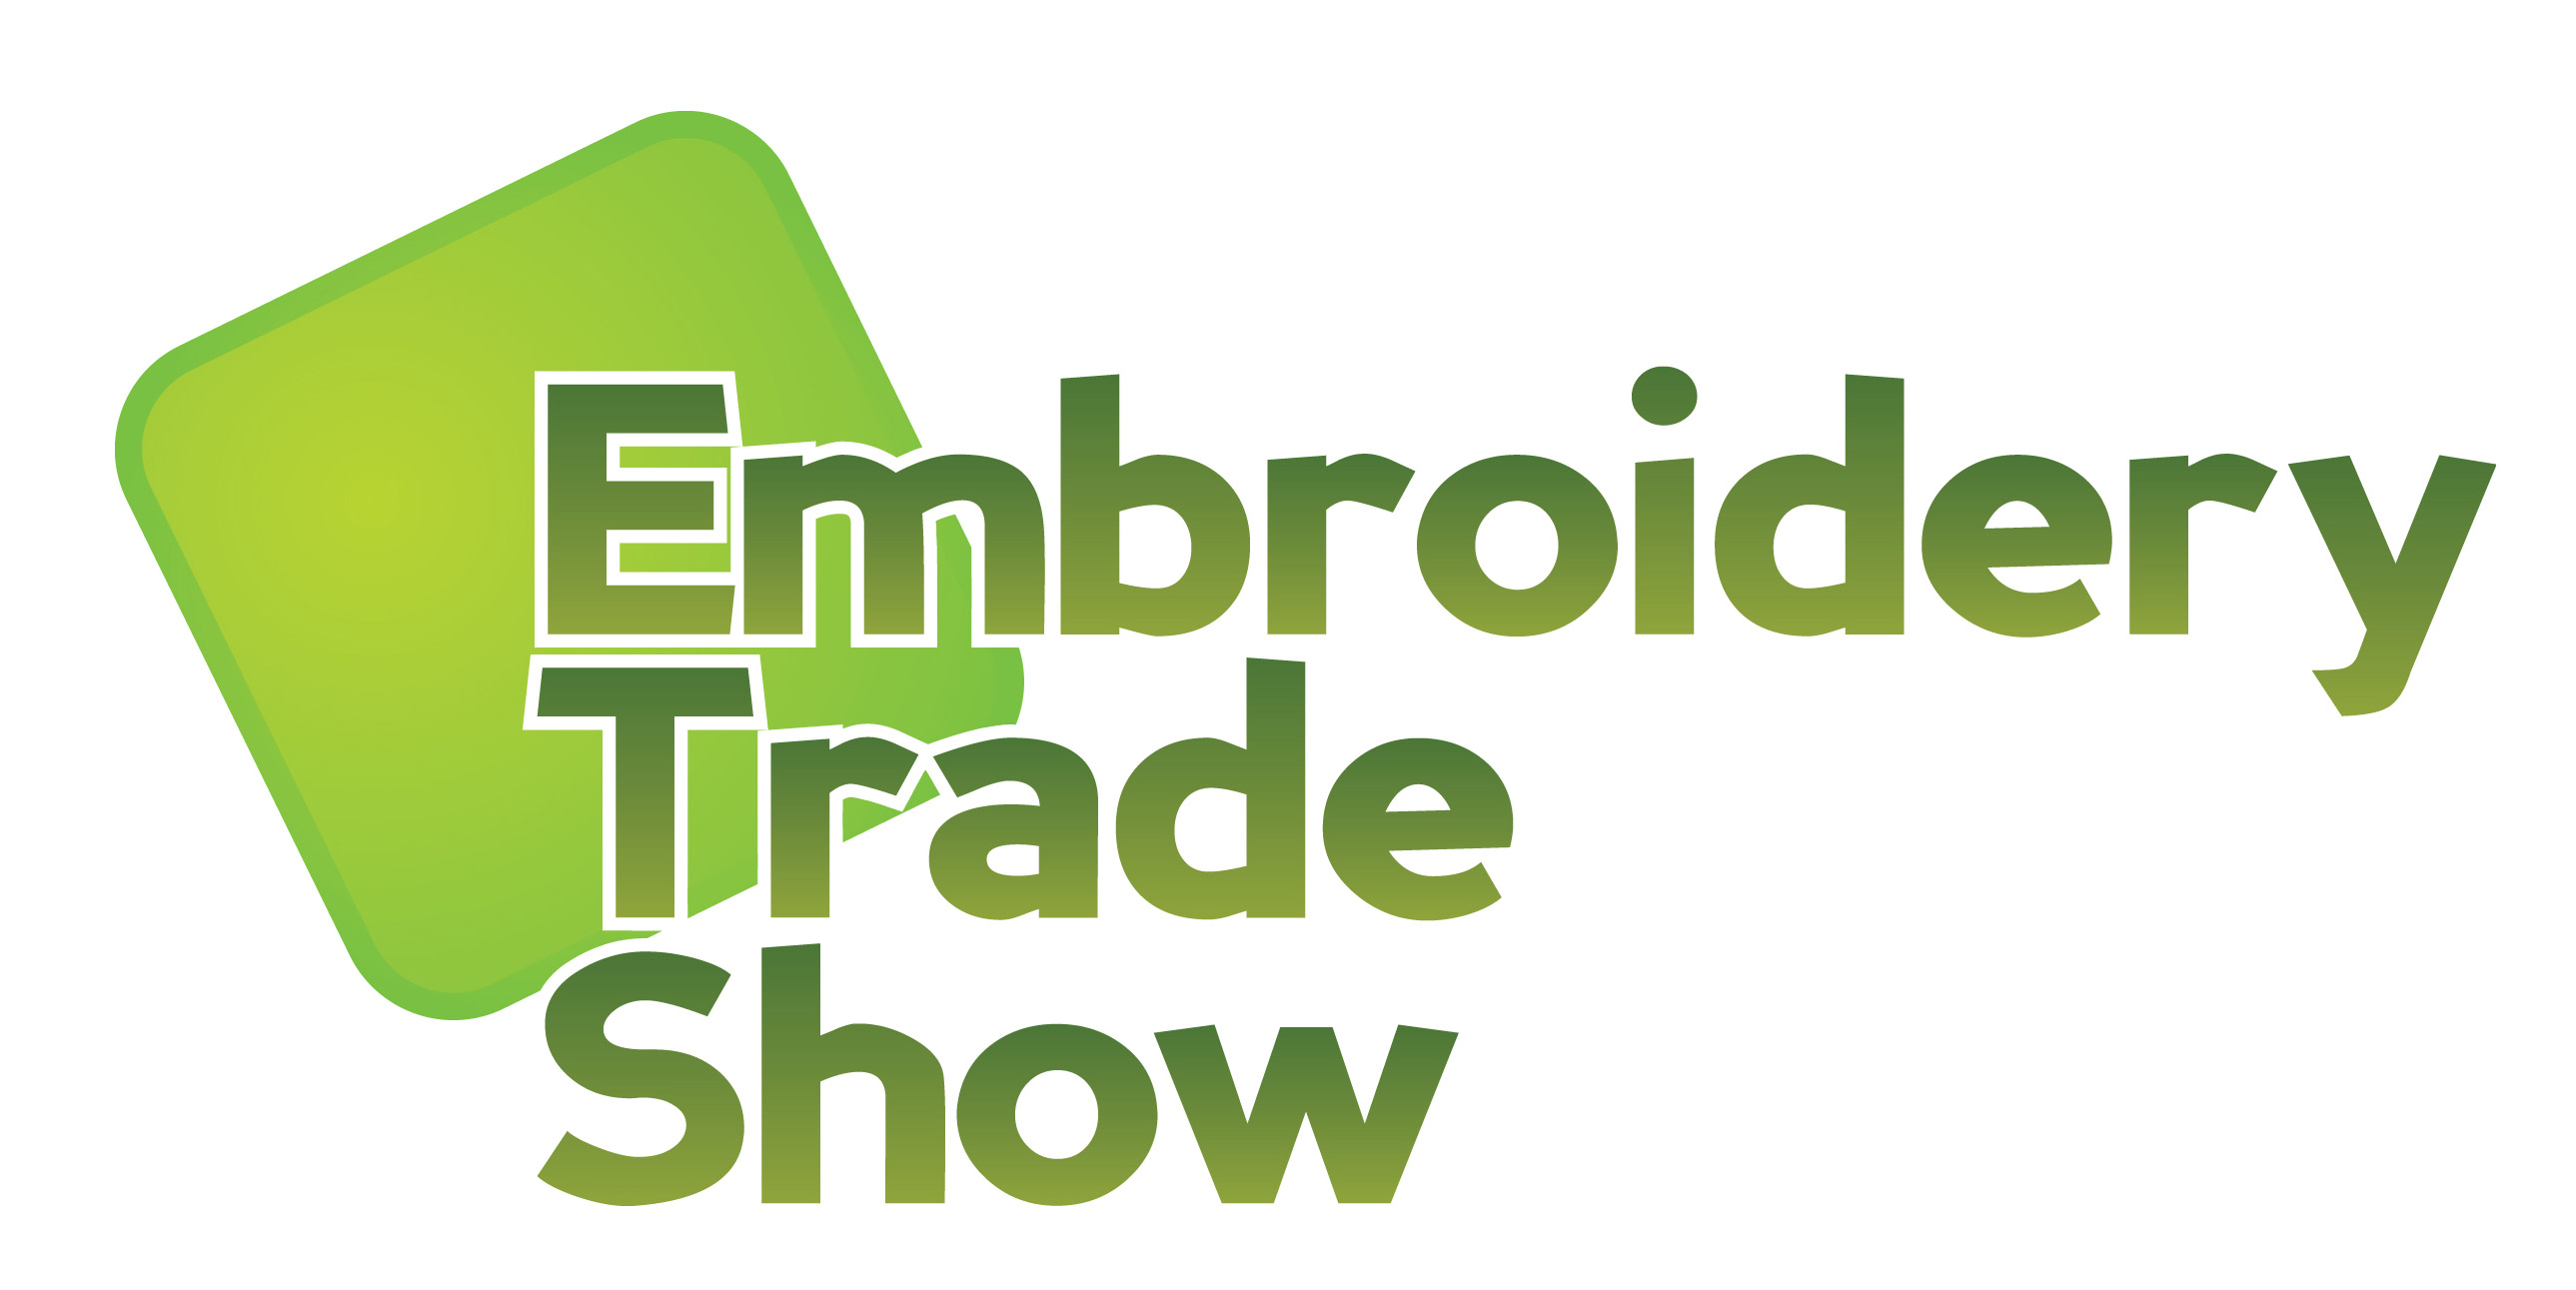 Embroidery Trade Show logo